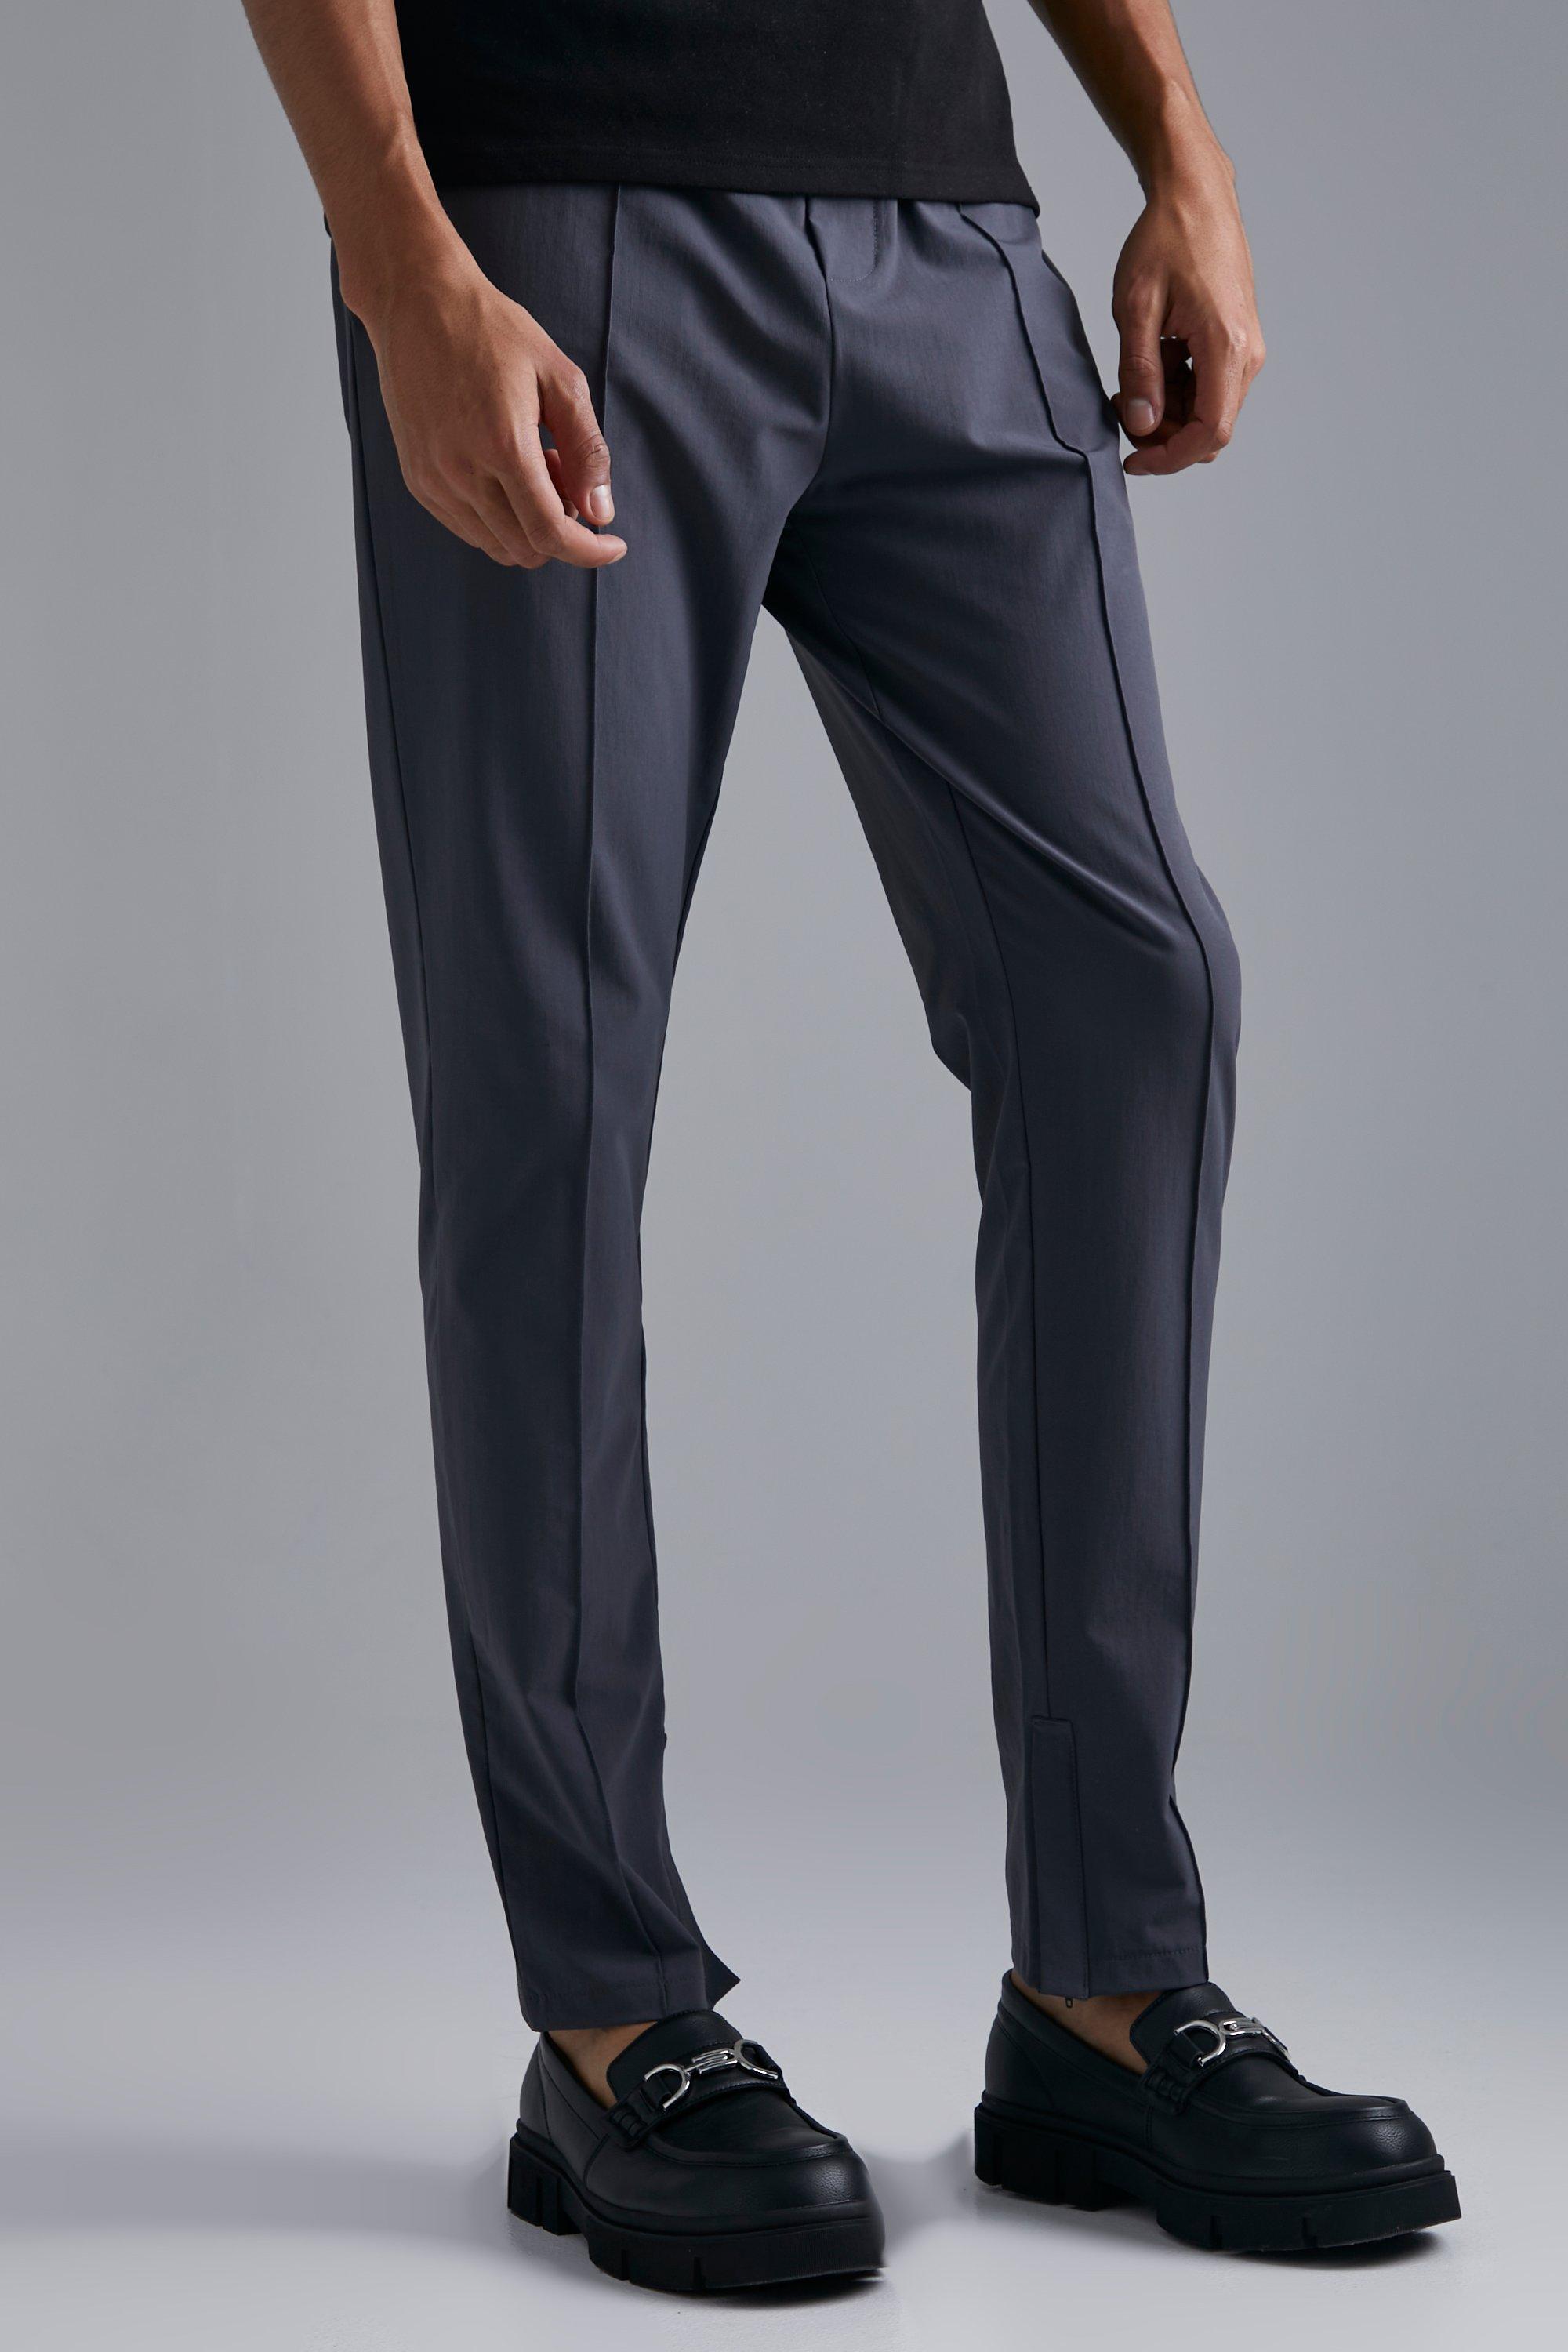 Tall Slim-Fit Hose Mit 4-Way Stretch - Dark Grey - S, Dark Grey